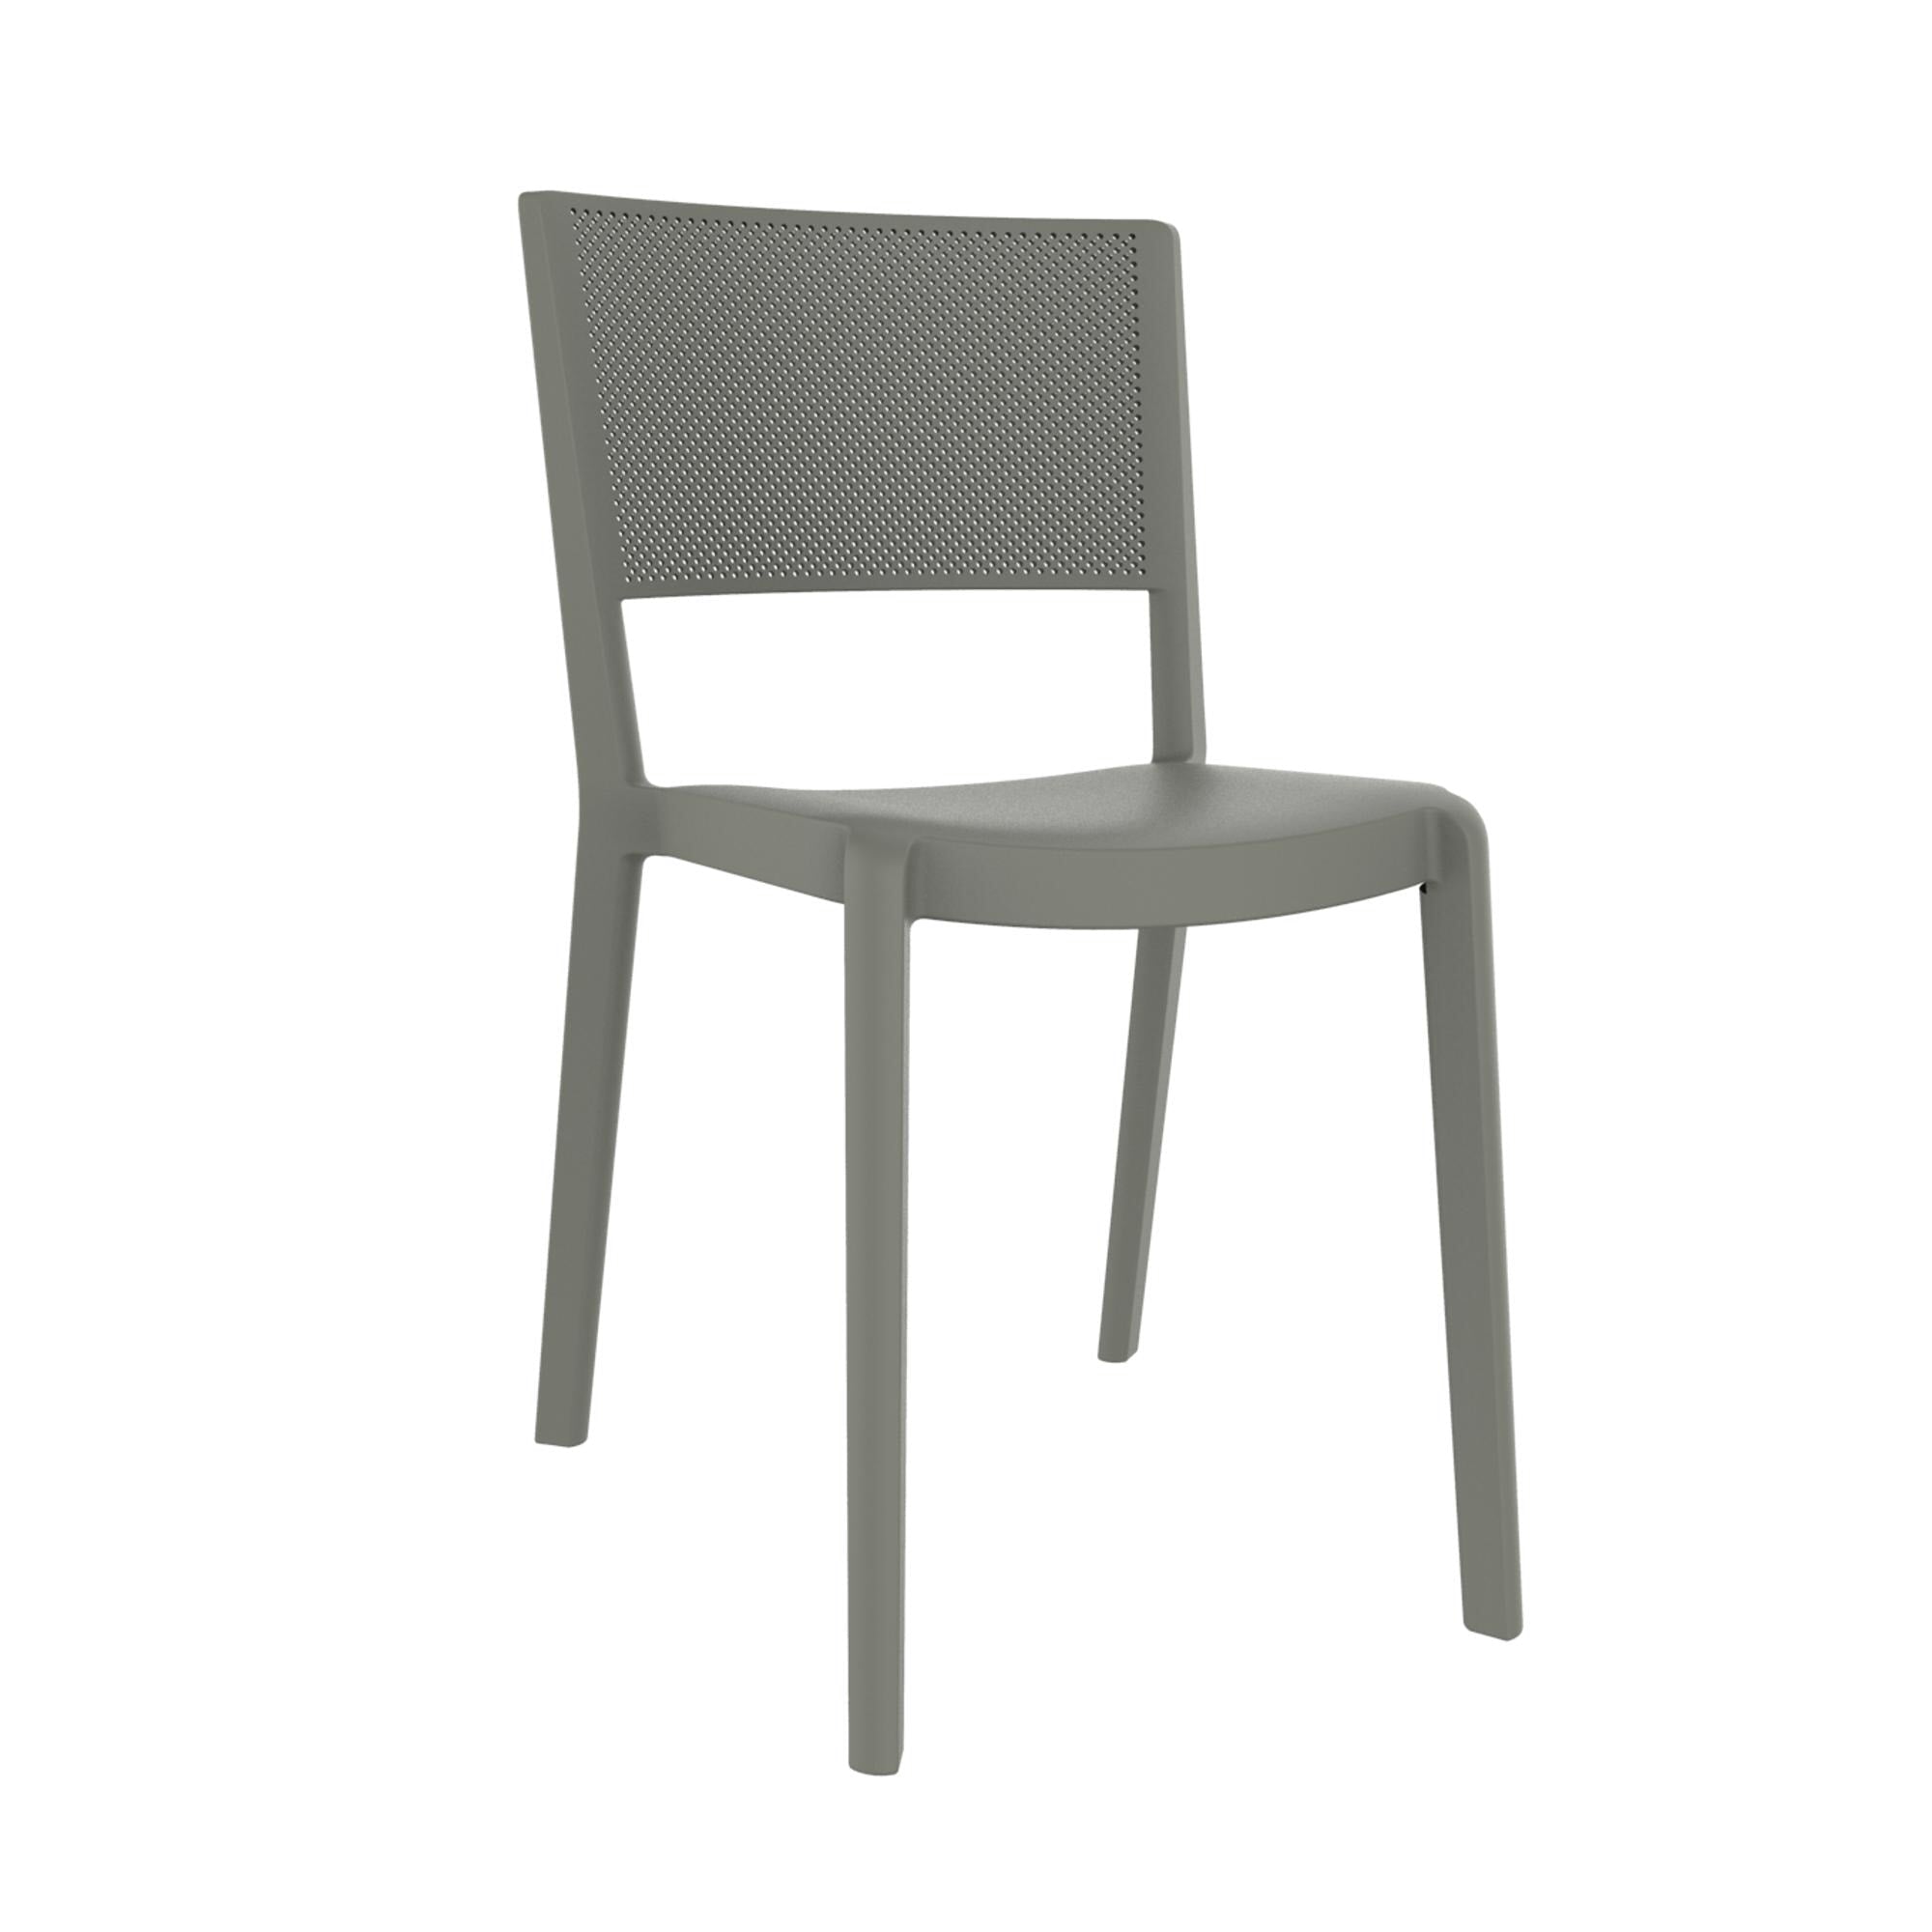 Resol spot chair inside, greenish gray outside